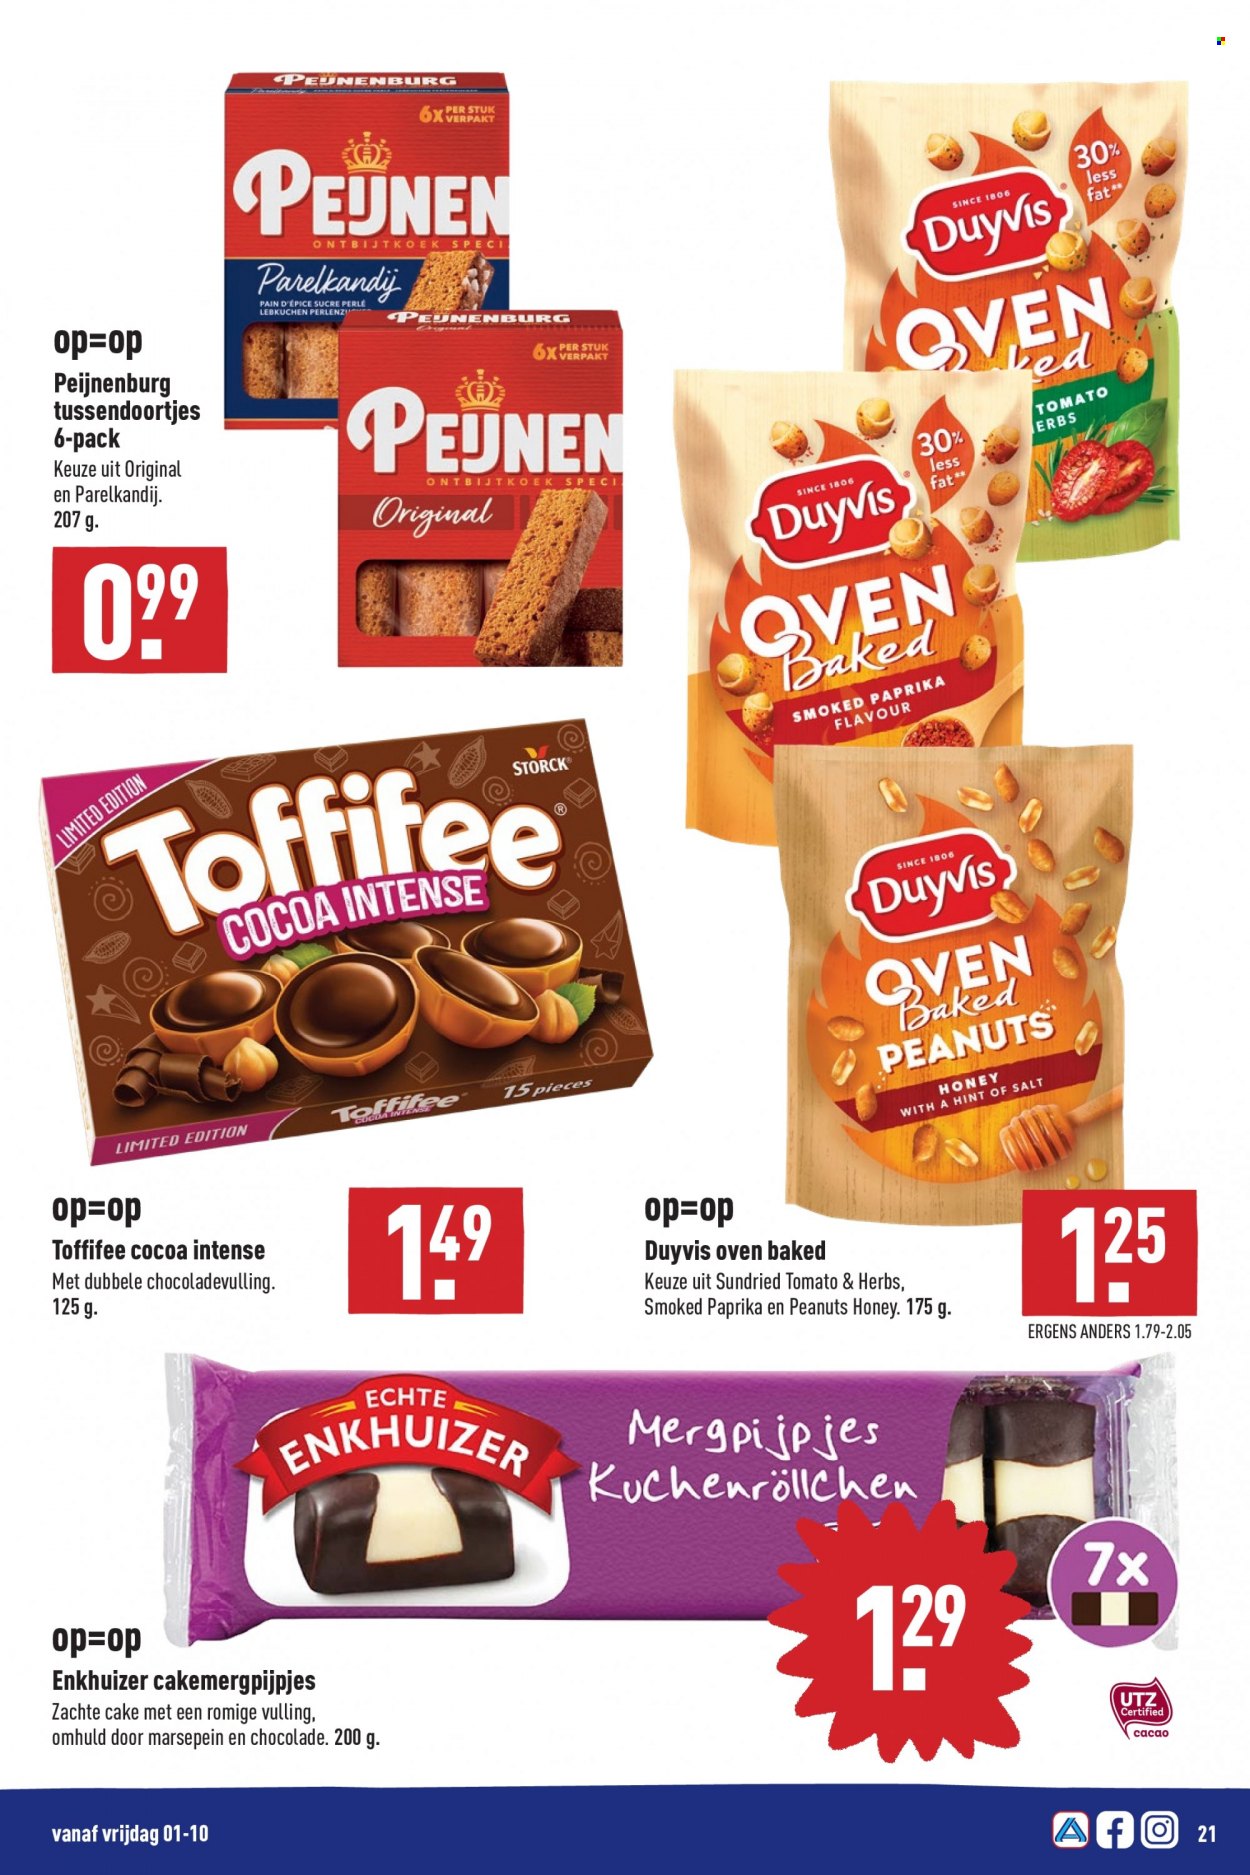 thumbnail - Aldi-aanbieding - 27-9-2021 - 3-10-2021 -  producten in de aanbieding - lebkuchen, ontbijtkoek, chocolade, Peijnenburg, Toffifee. Pagina 21.